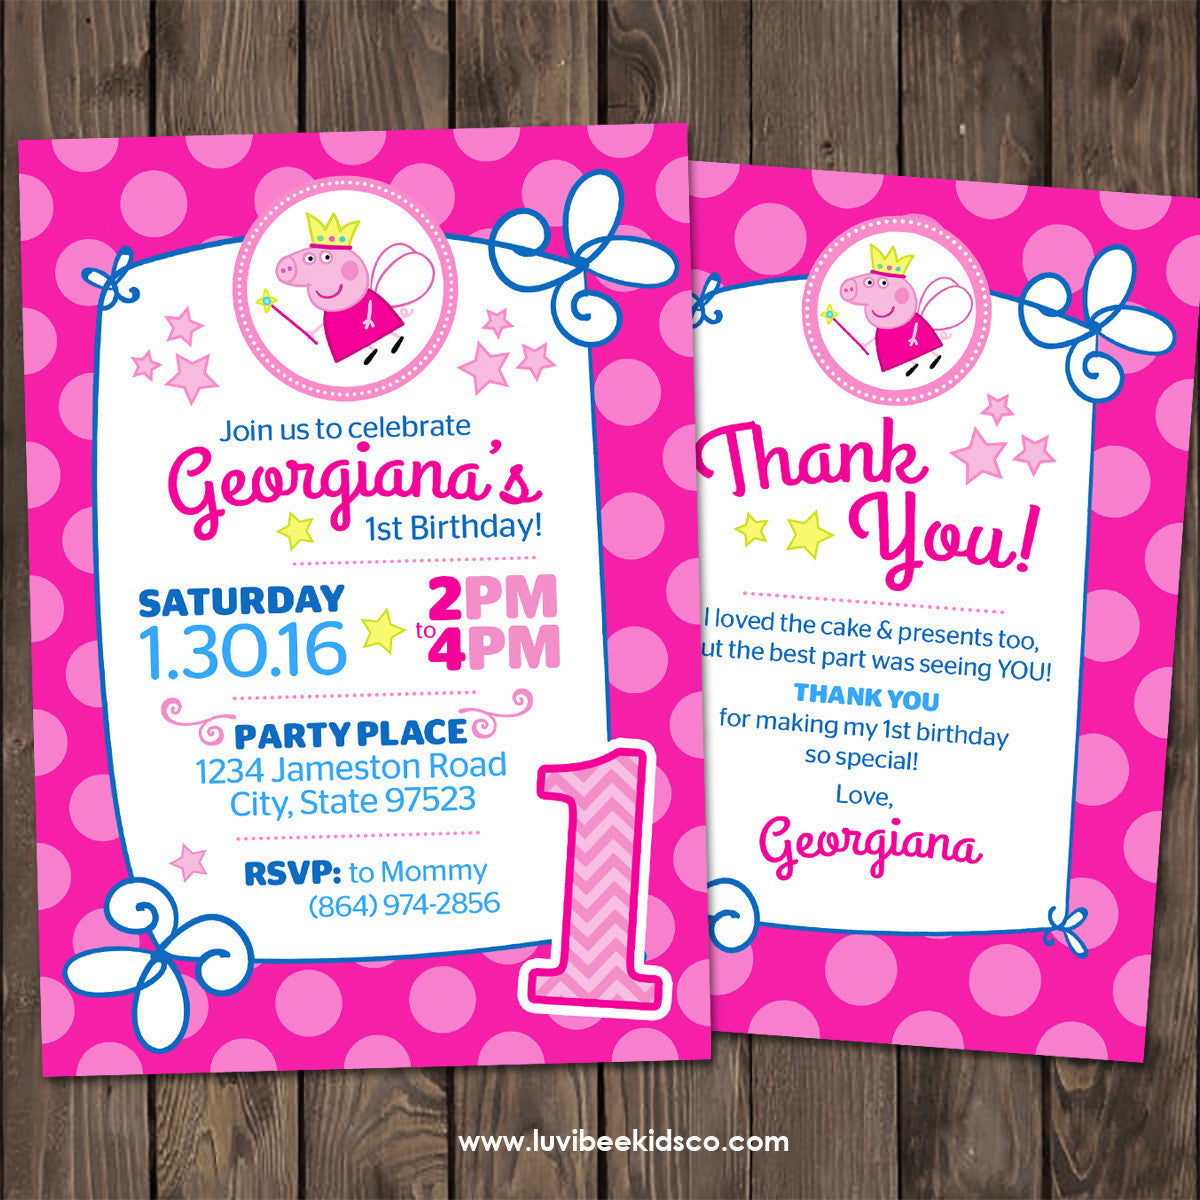 Peppa Pig Fairy Birthday Invitation | Free Backside & Thank You Card - LuvibeeKidsCo